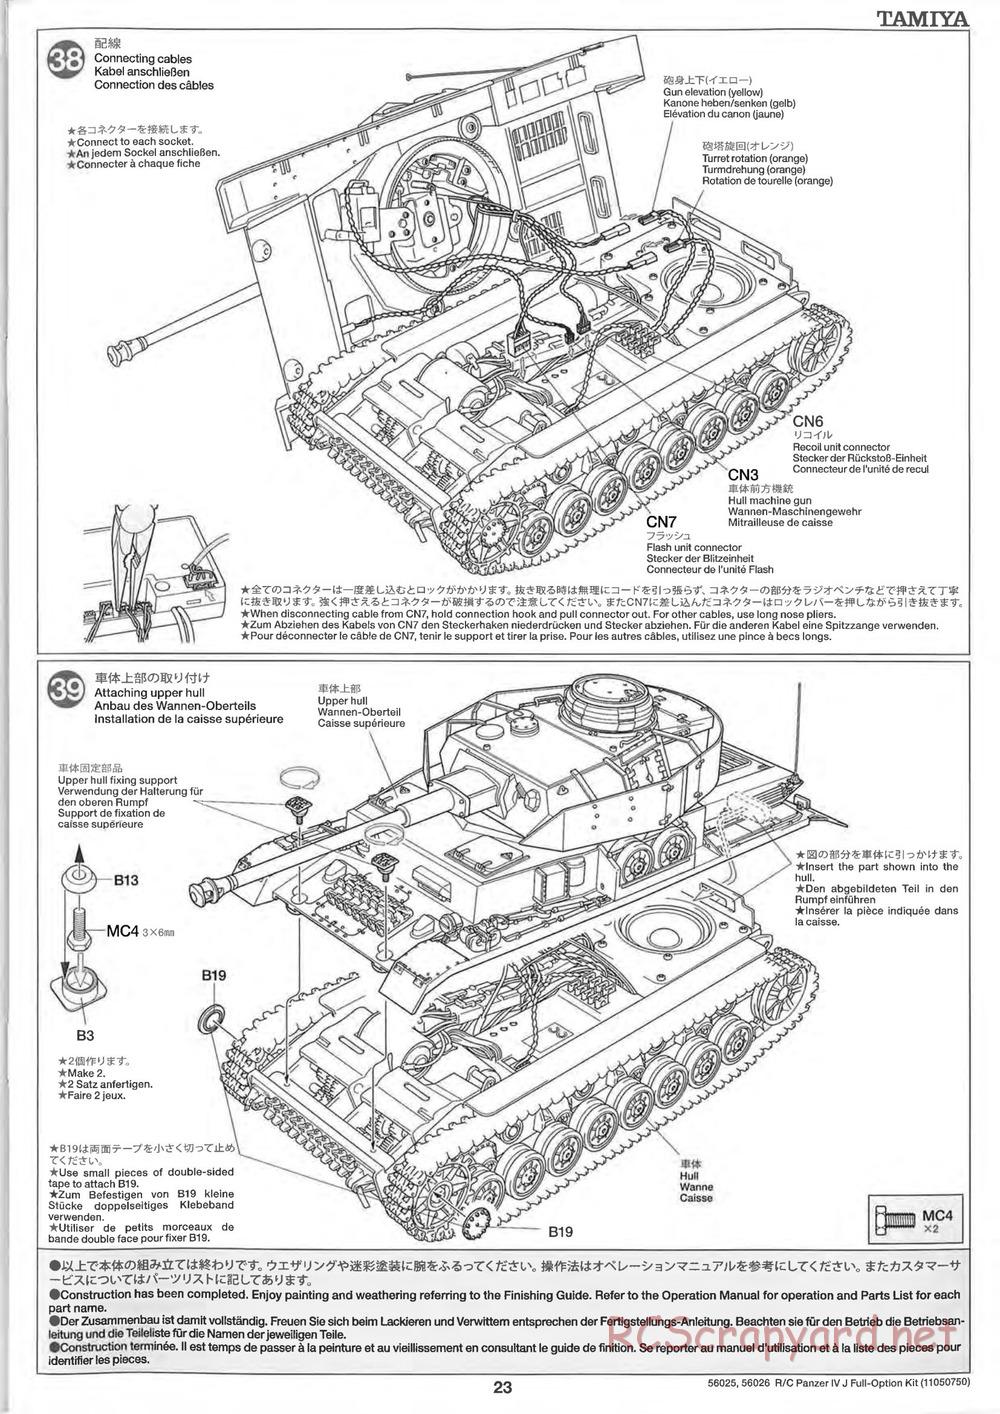 Tamiya - Panzerkampfwagen IV Ausf.J - 1/16 Scale Chassis - Manual - Page 23